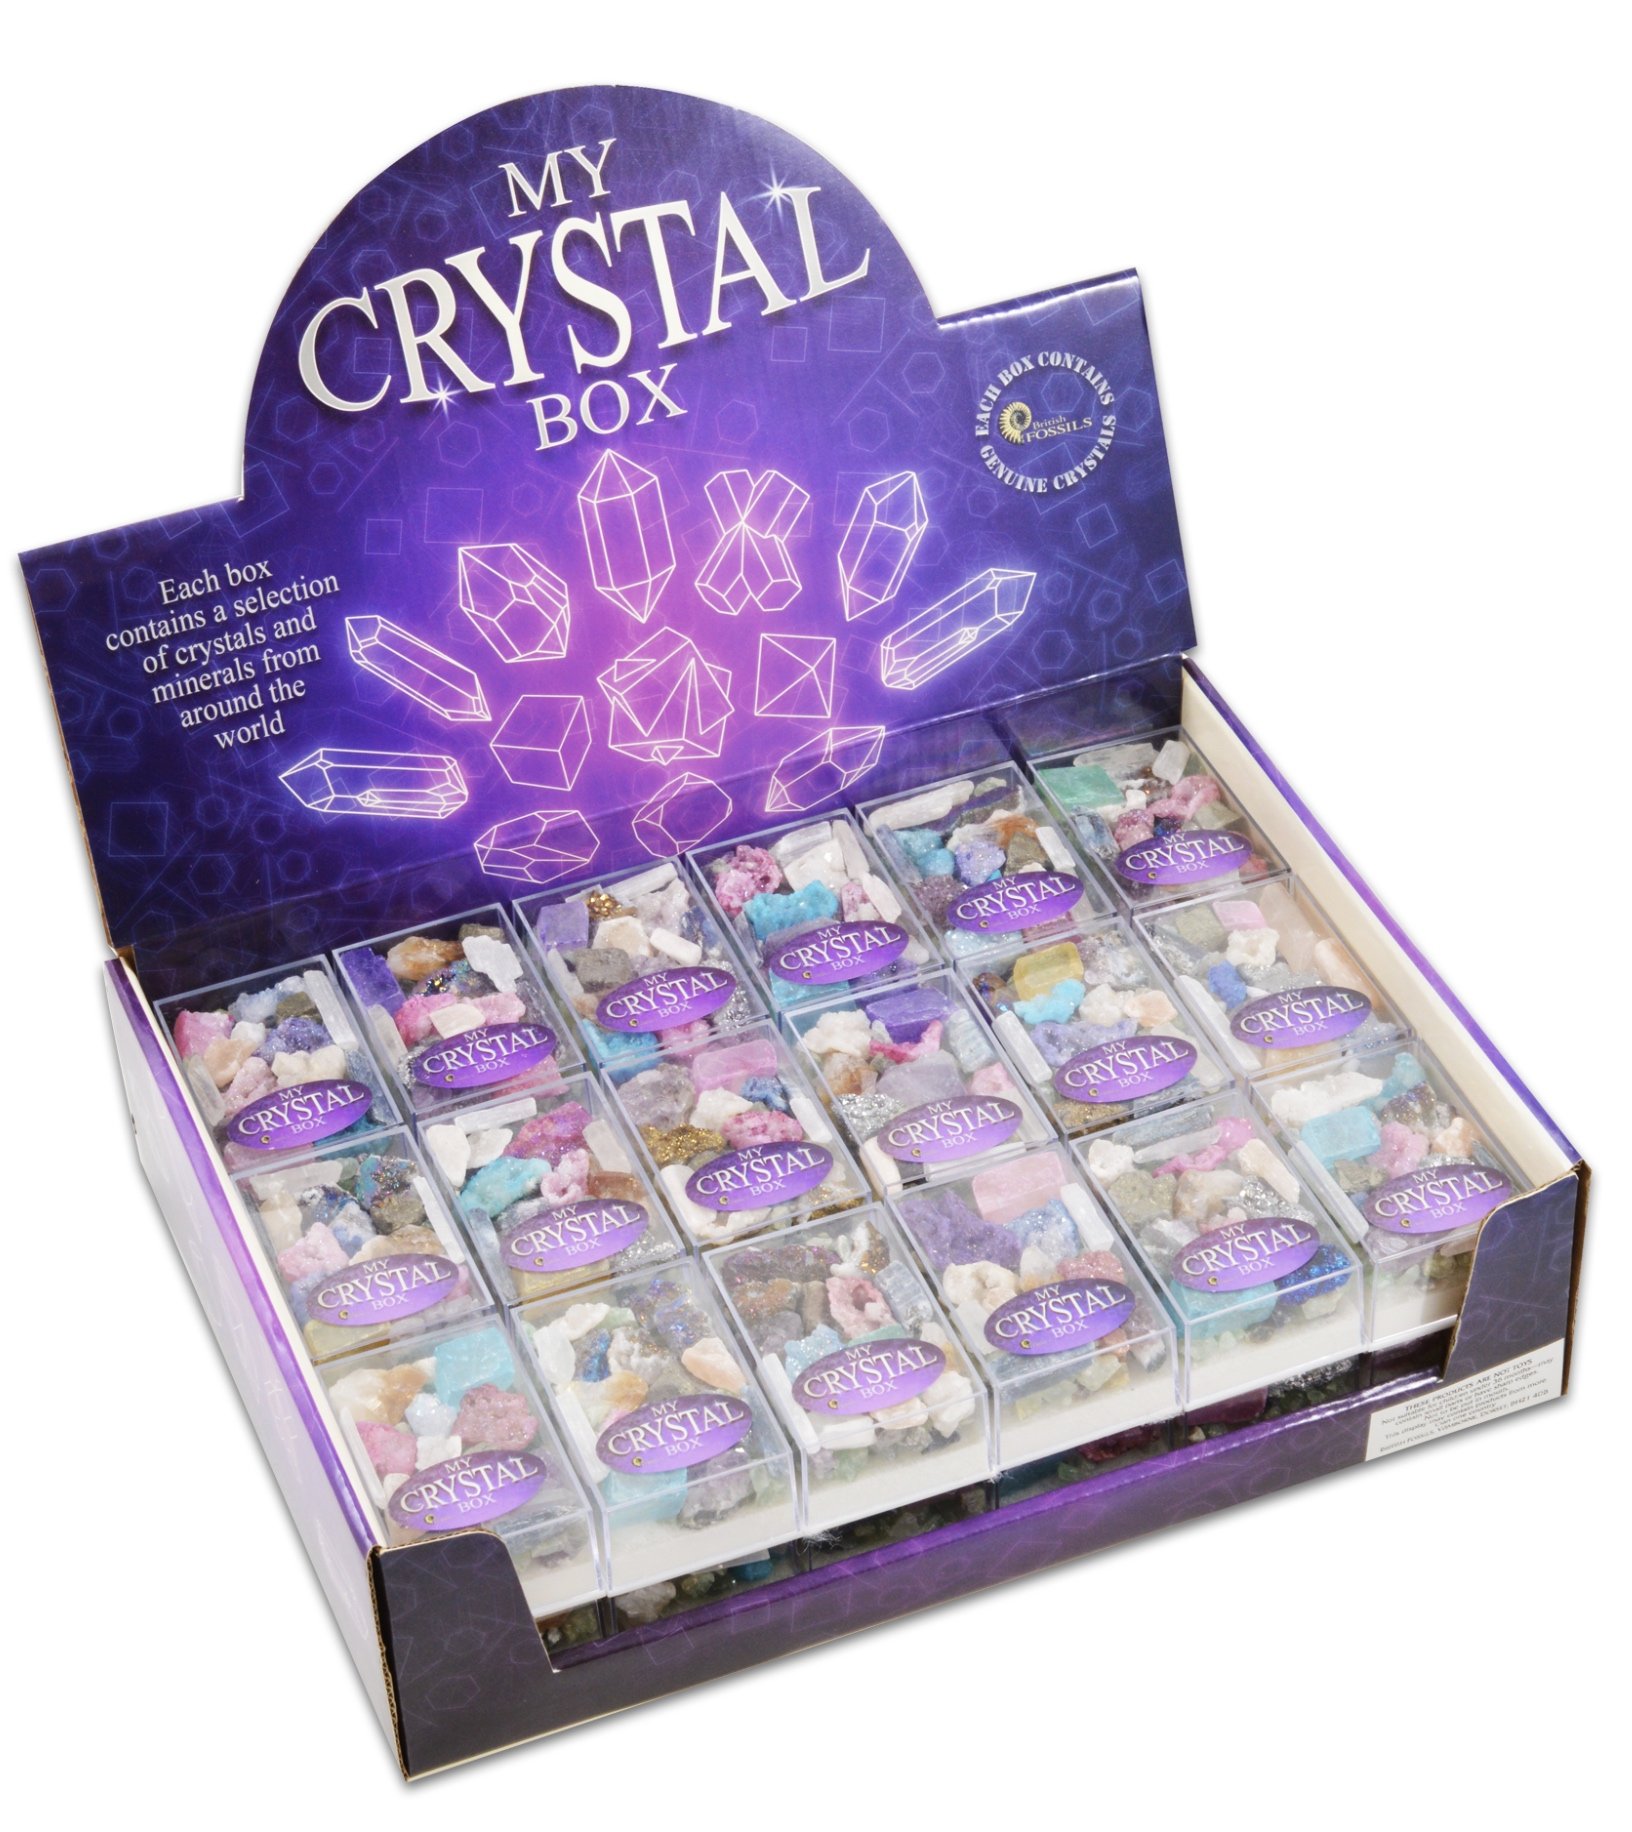 Кристалл бокс. Cristal Box 3244 12 12. Игрушка бокс Кристаллы. Billet Box Crystal. Crystal box